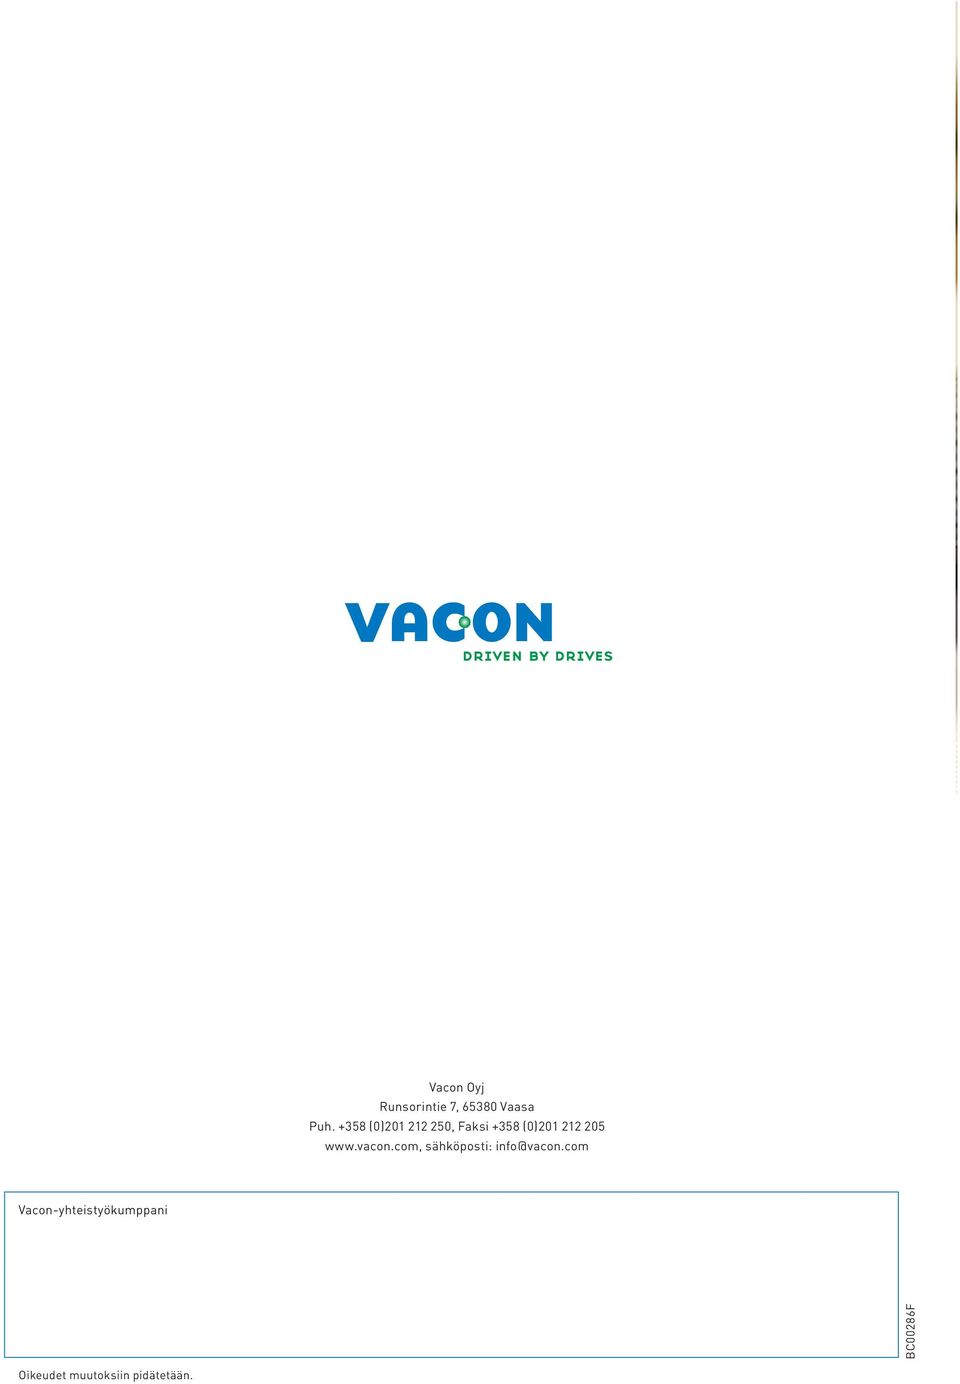 vacon.com, sähköposti: info@vacon.